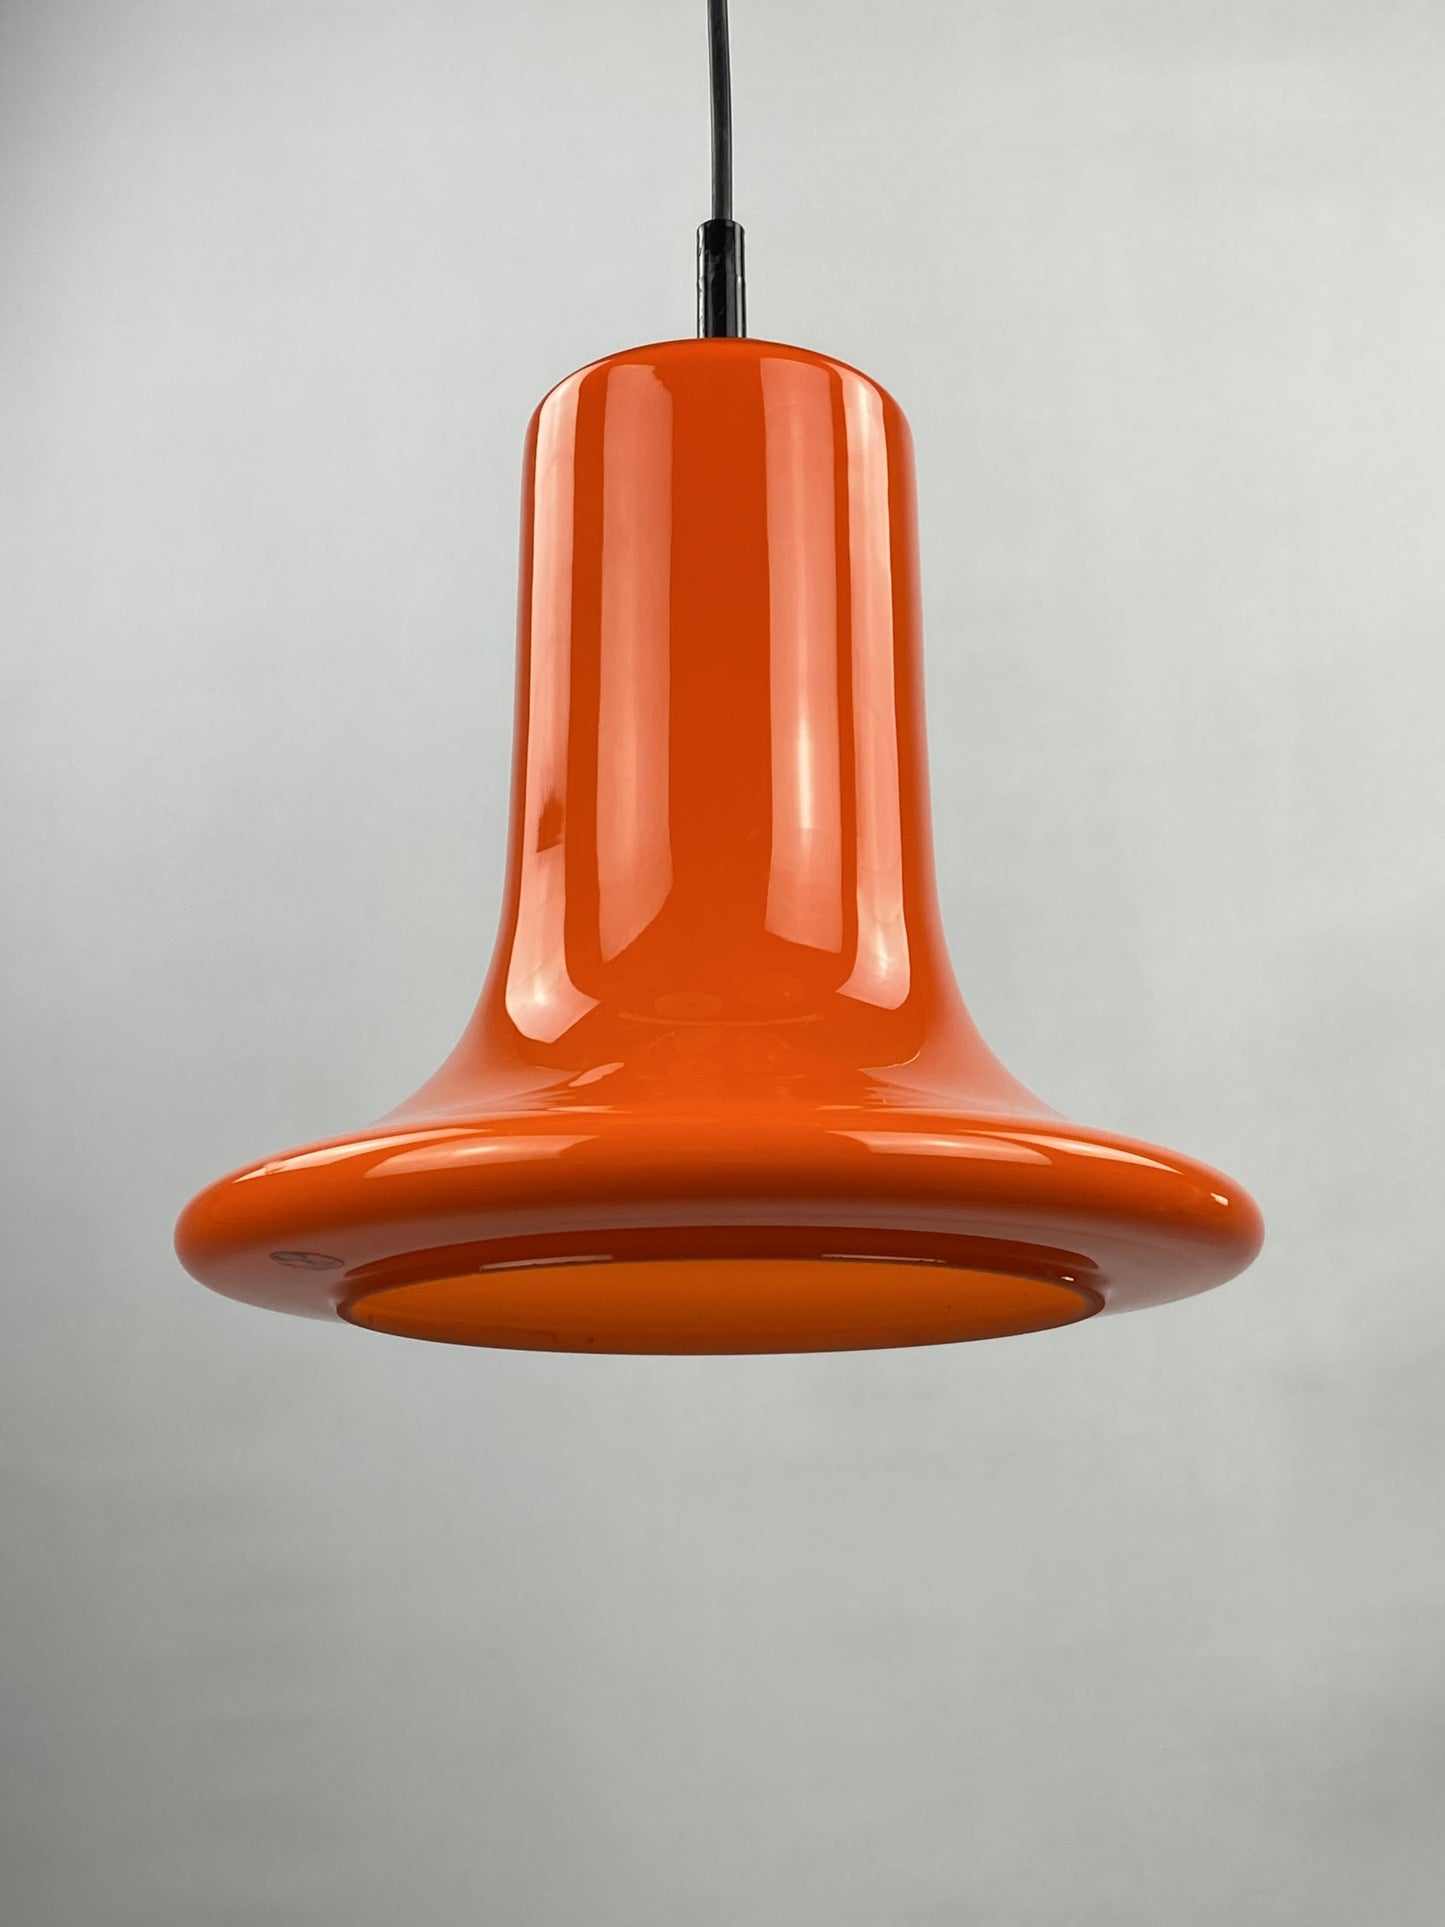 1 of 2 Rare orange trumpet shaped glass pendant light by Peill and Putzler 1960